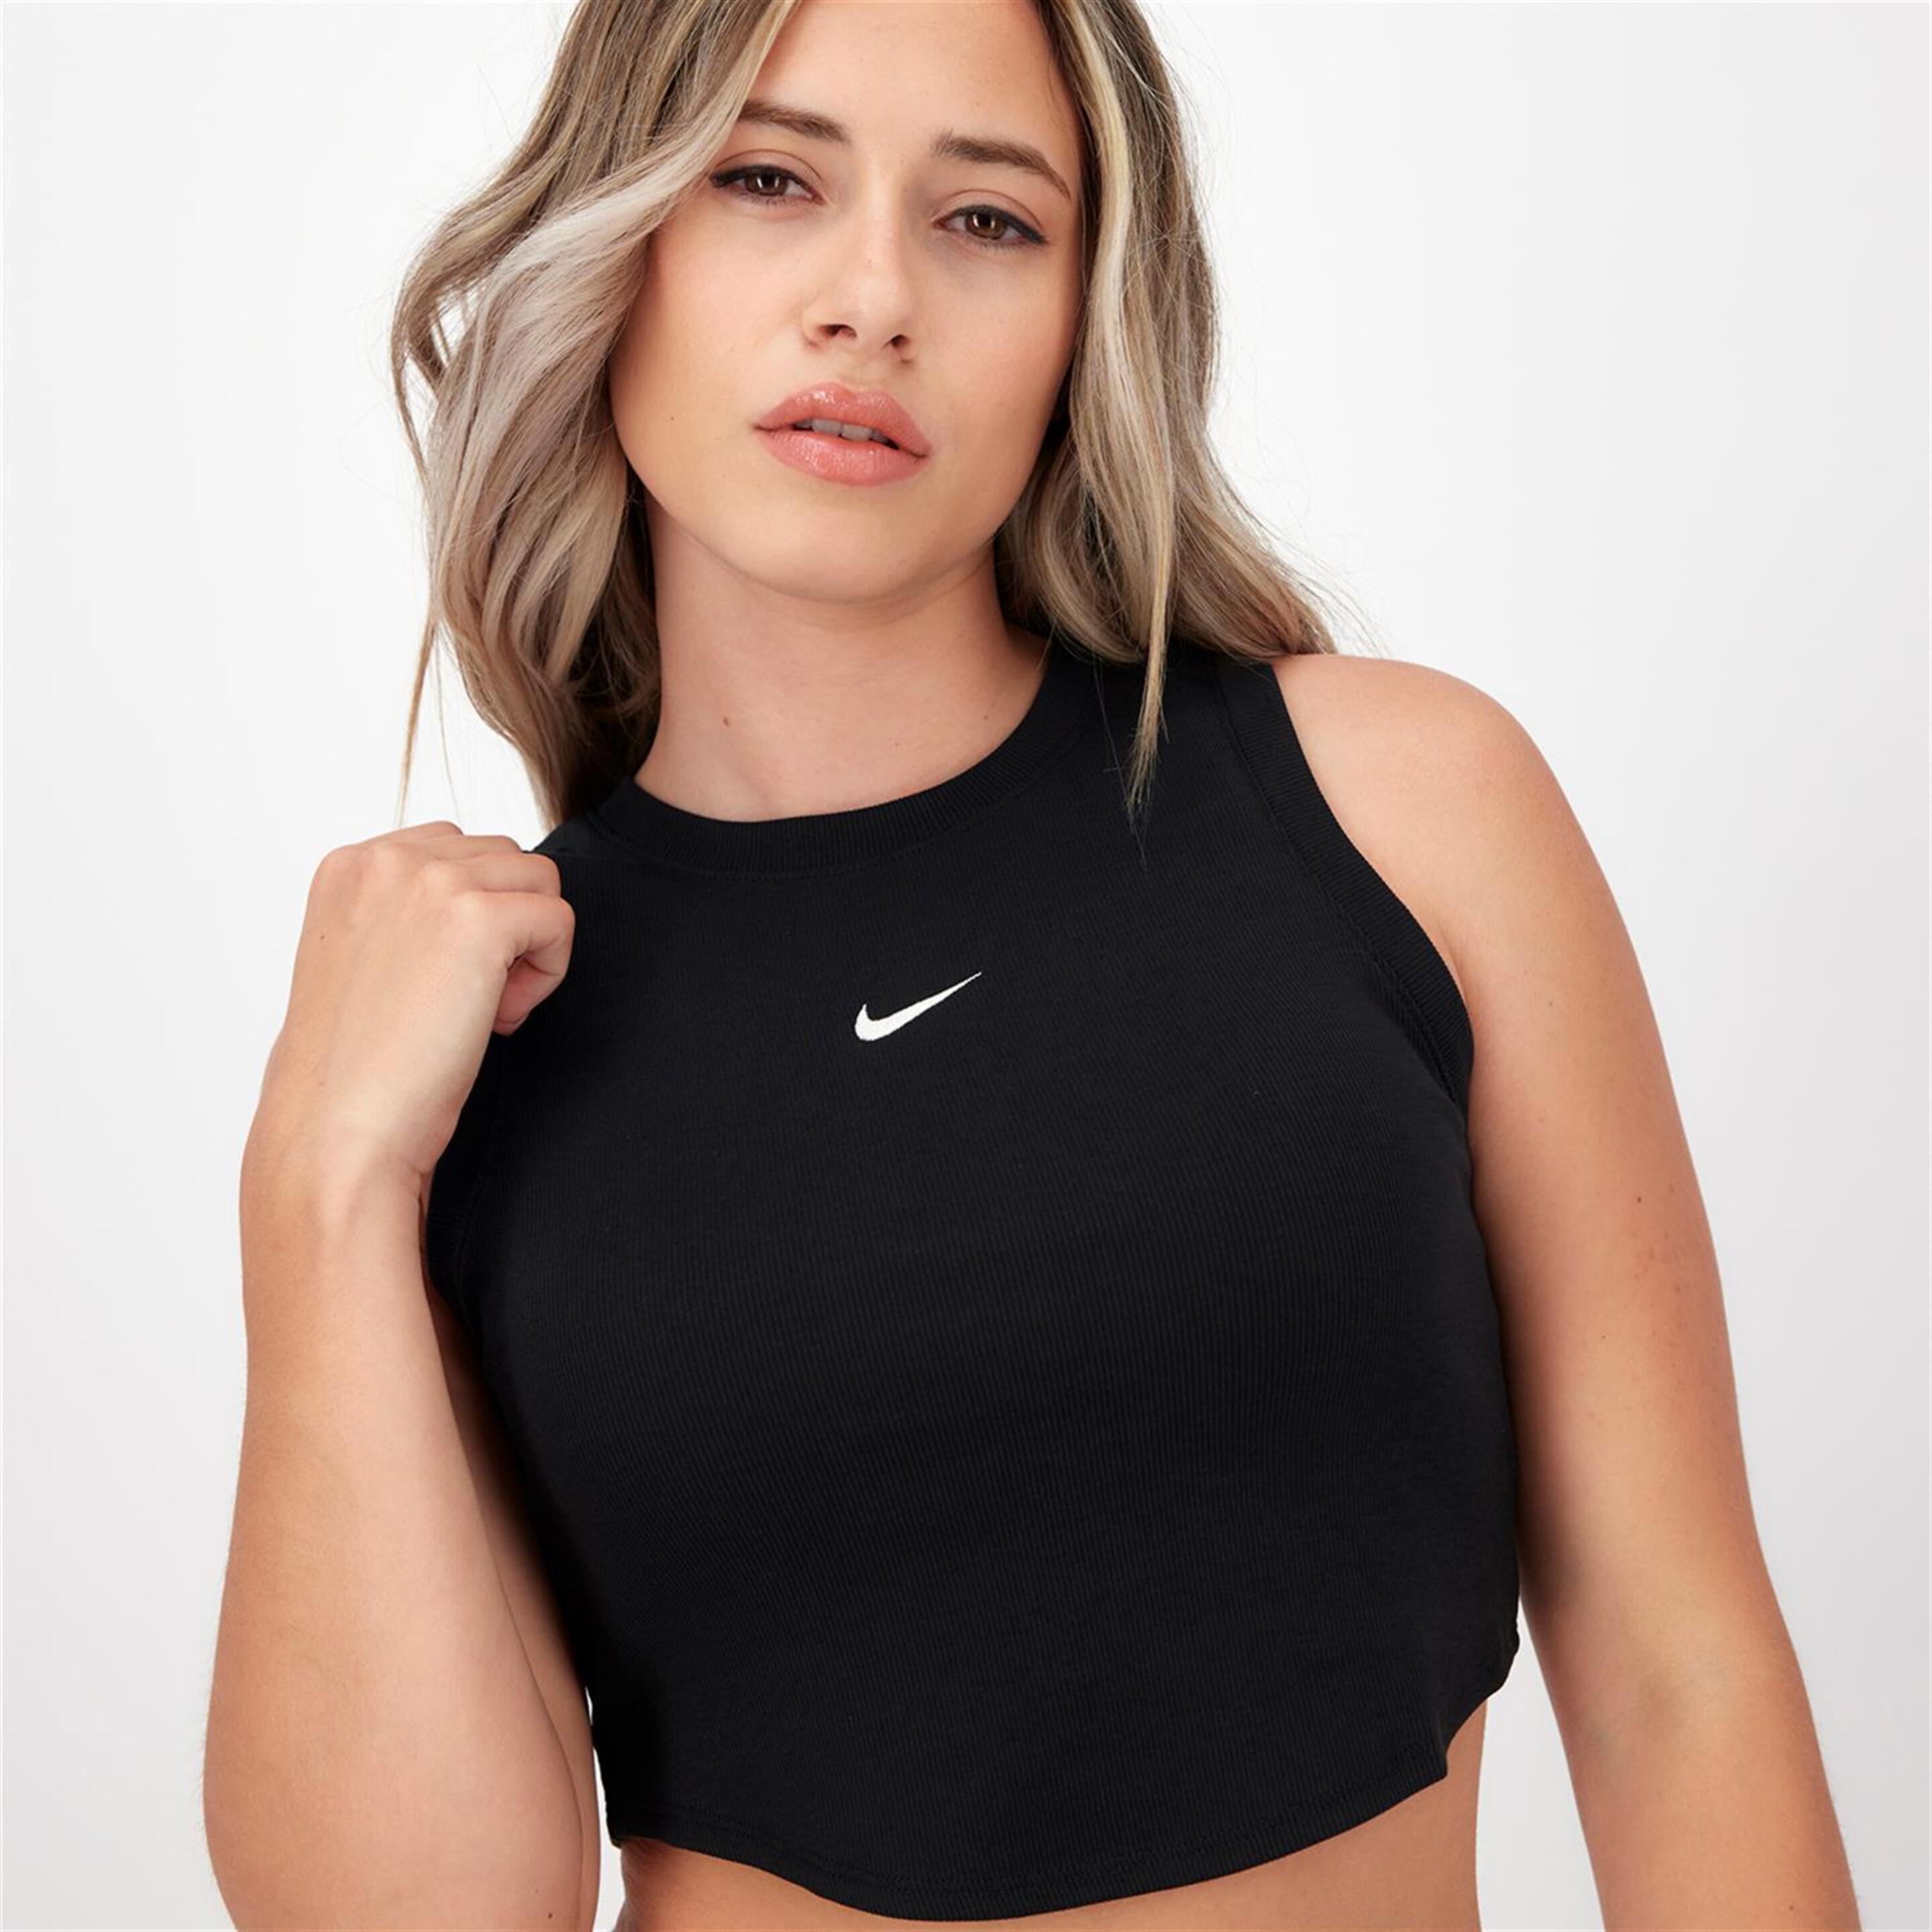 Camiseta Nike - Negro - Crop Top Mujer